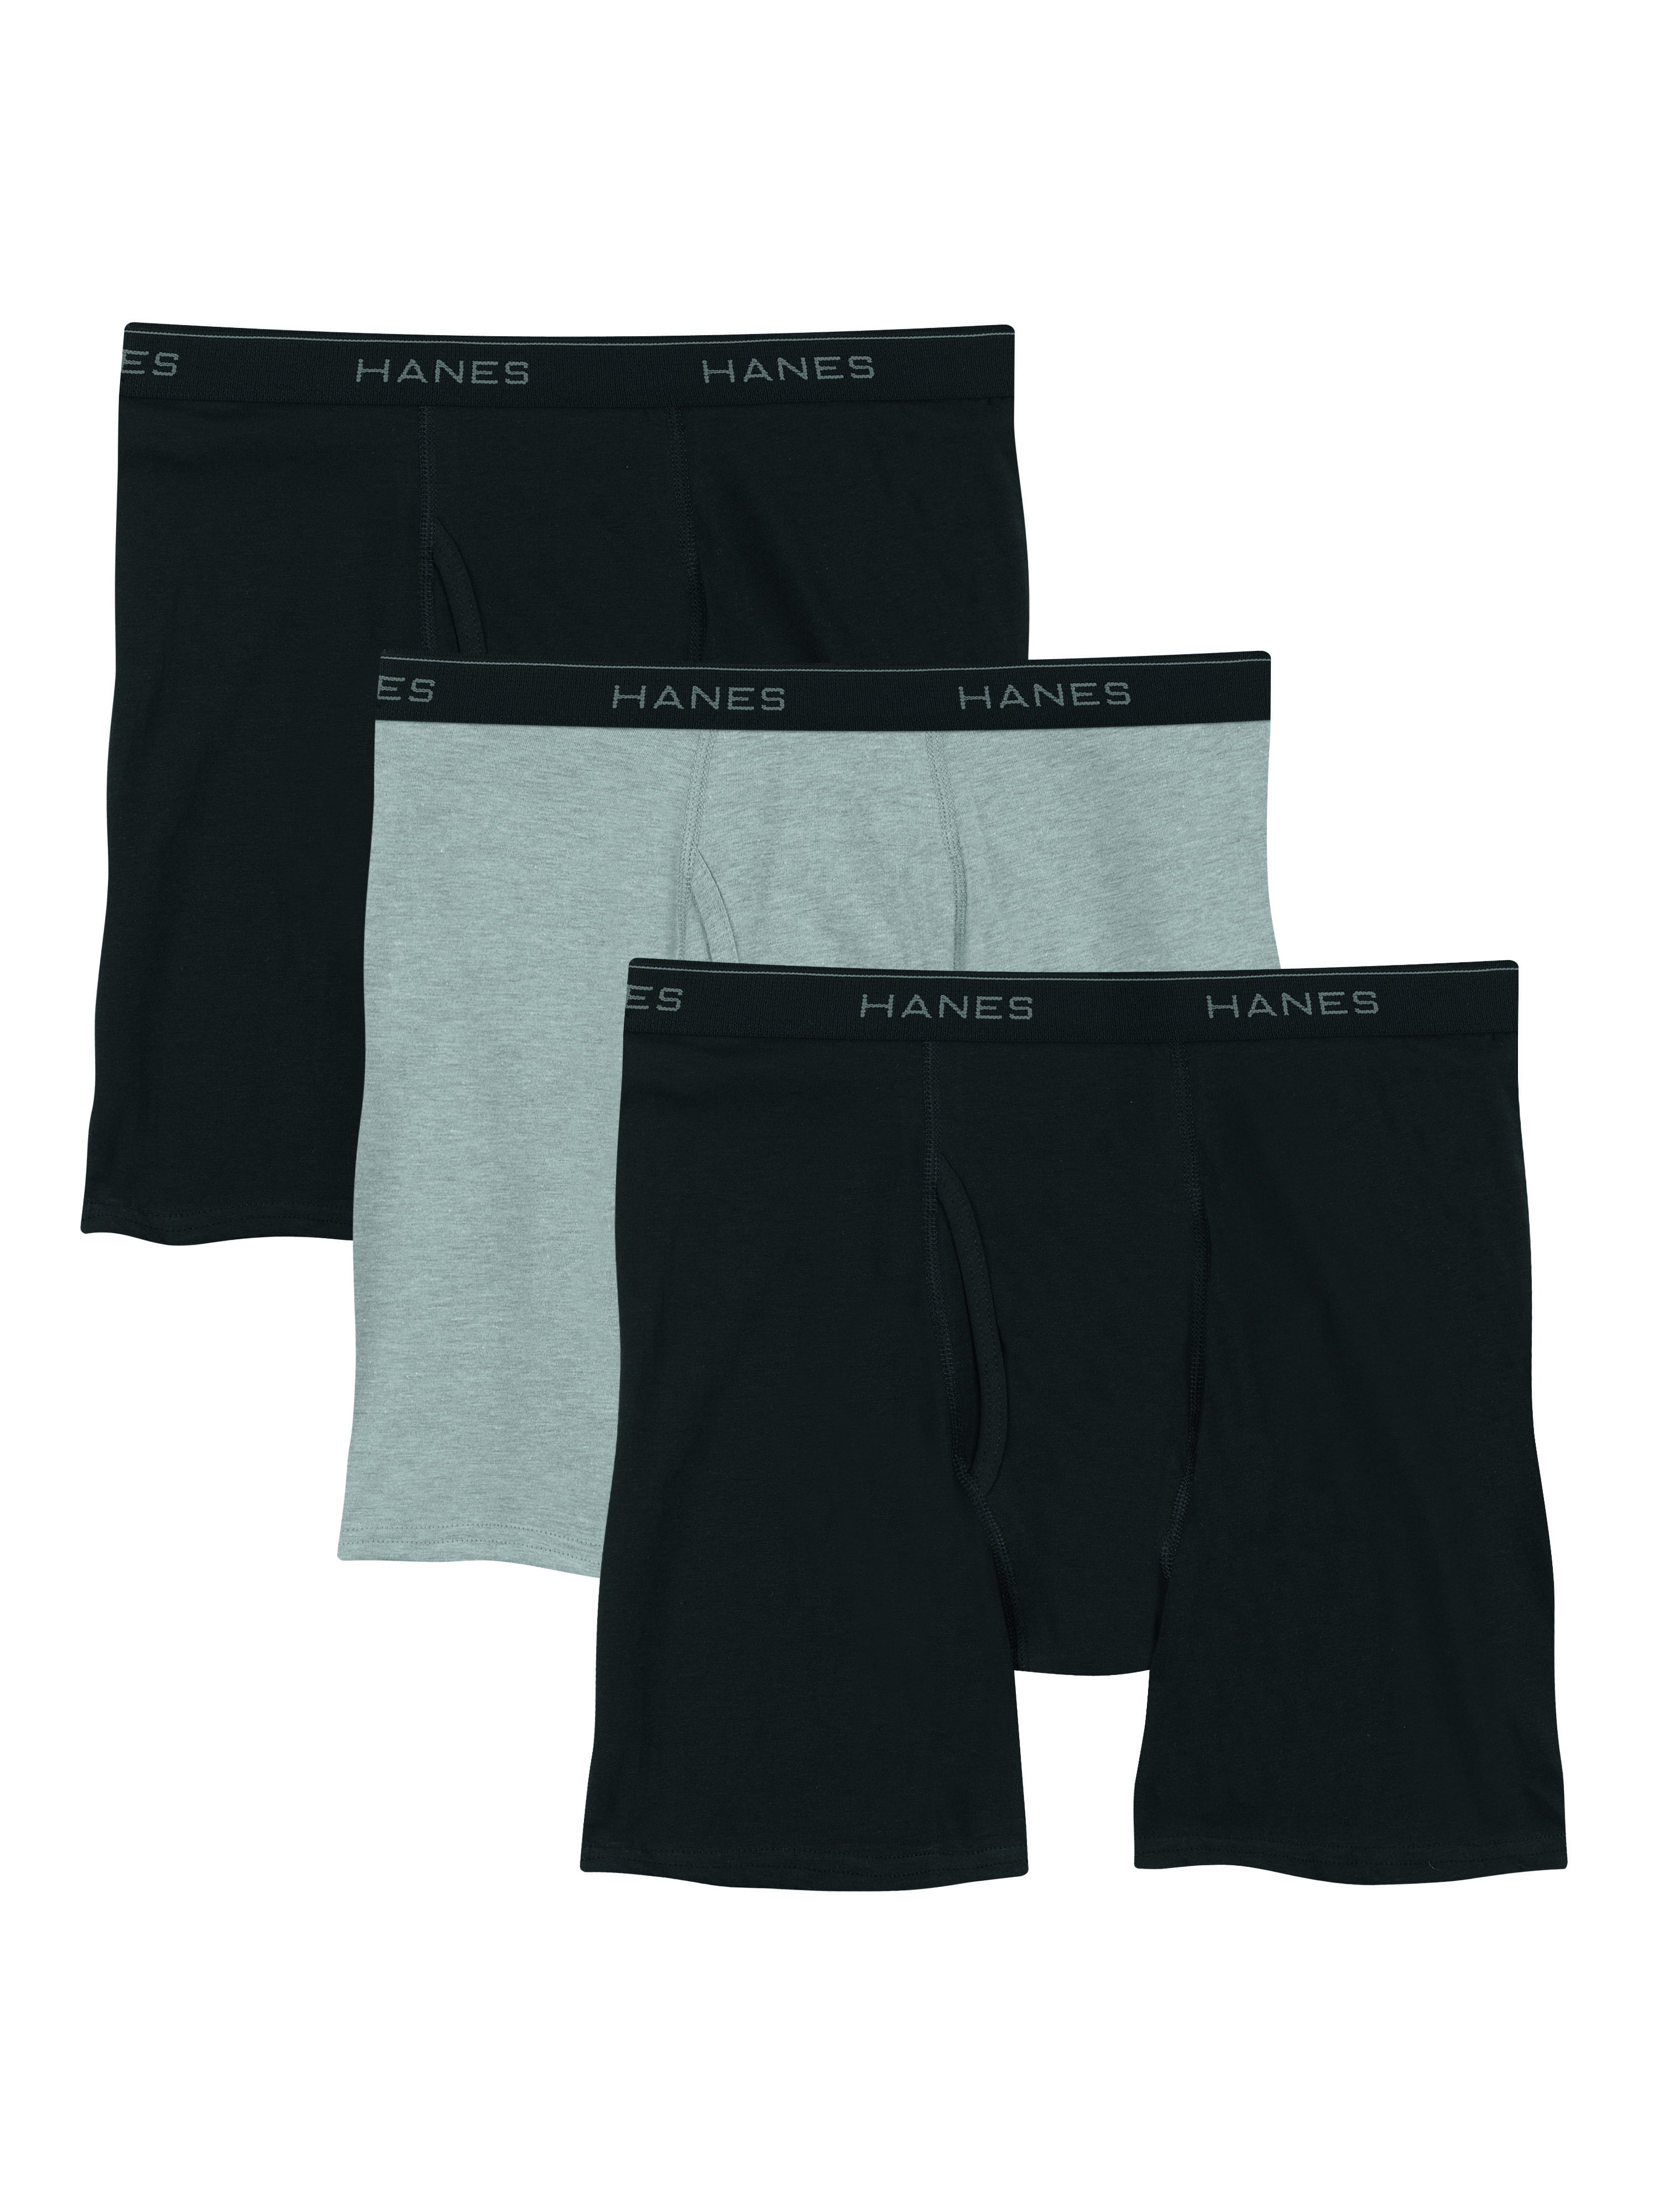 Hanes Men's Boxer Briefs, Black/Gray, 6 Pack, Large